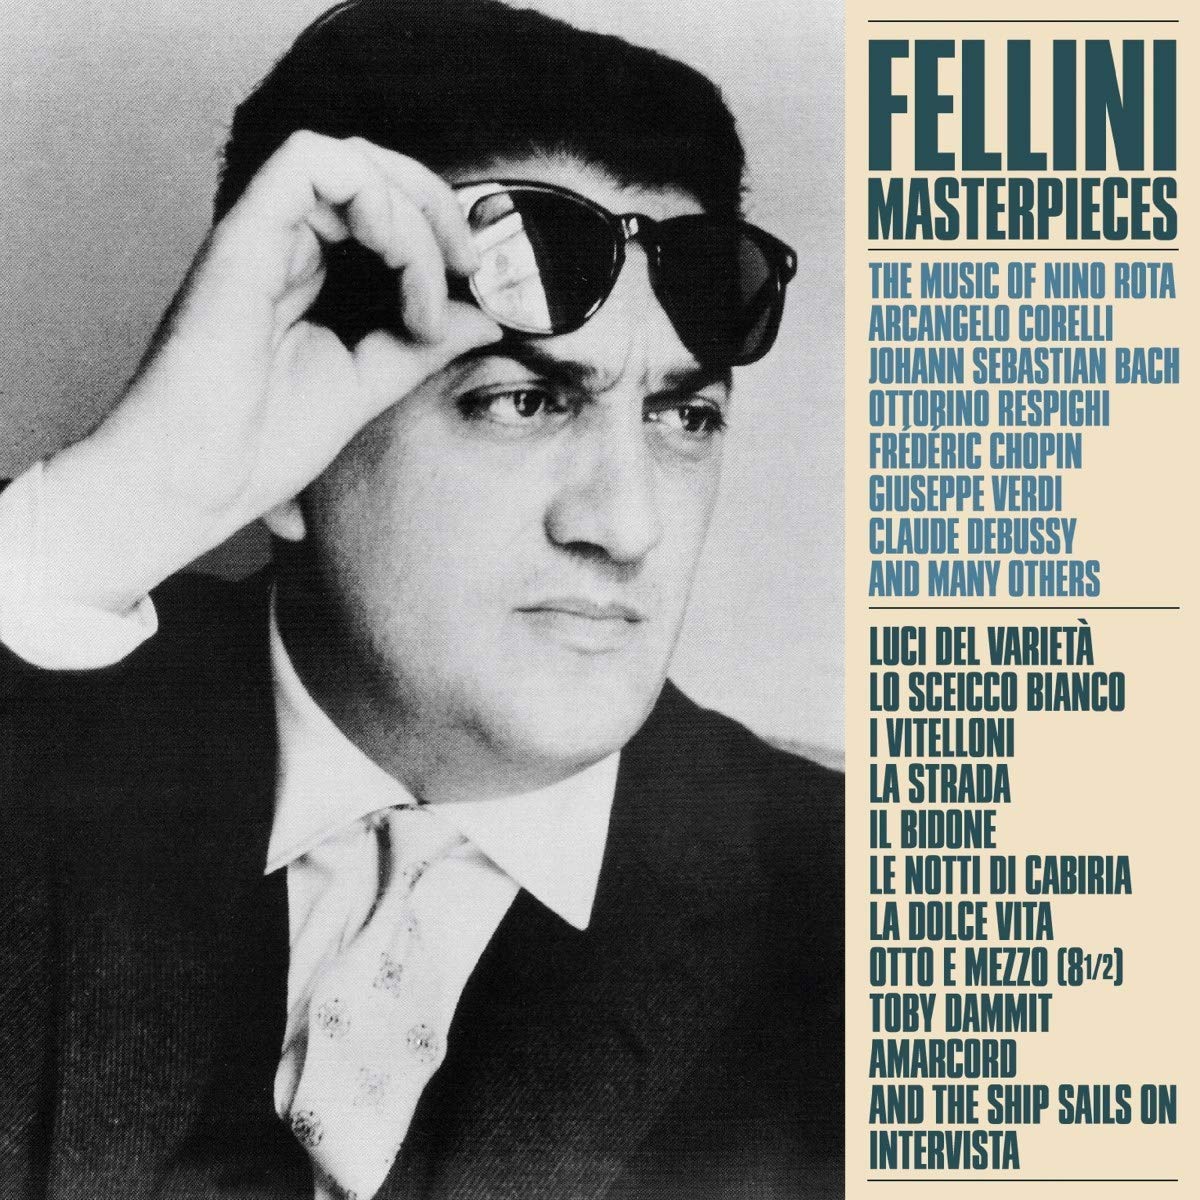 Fellini Masterpieces